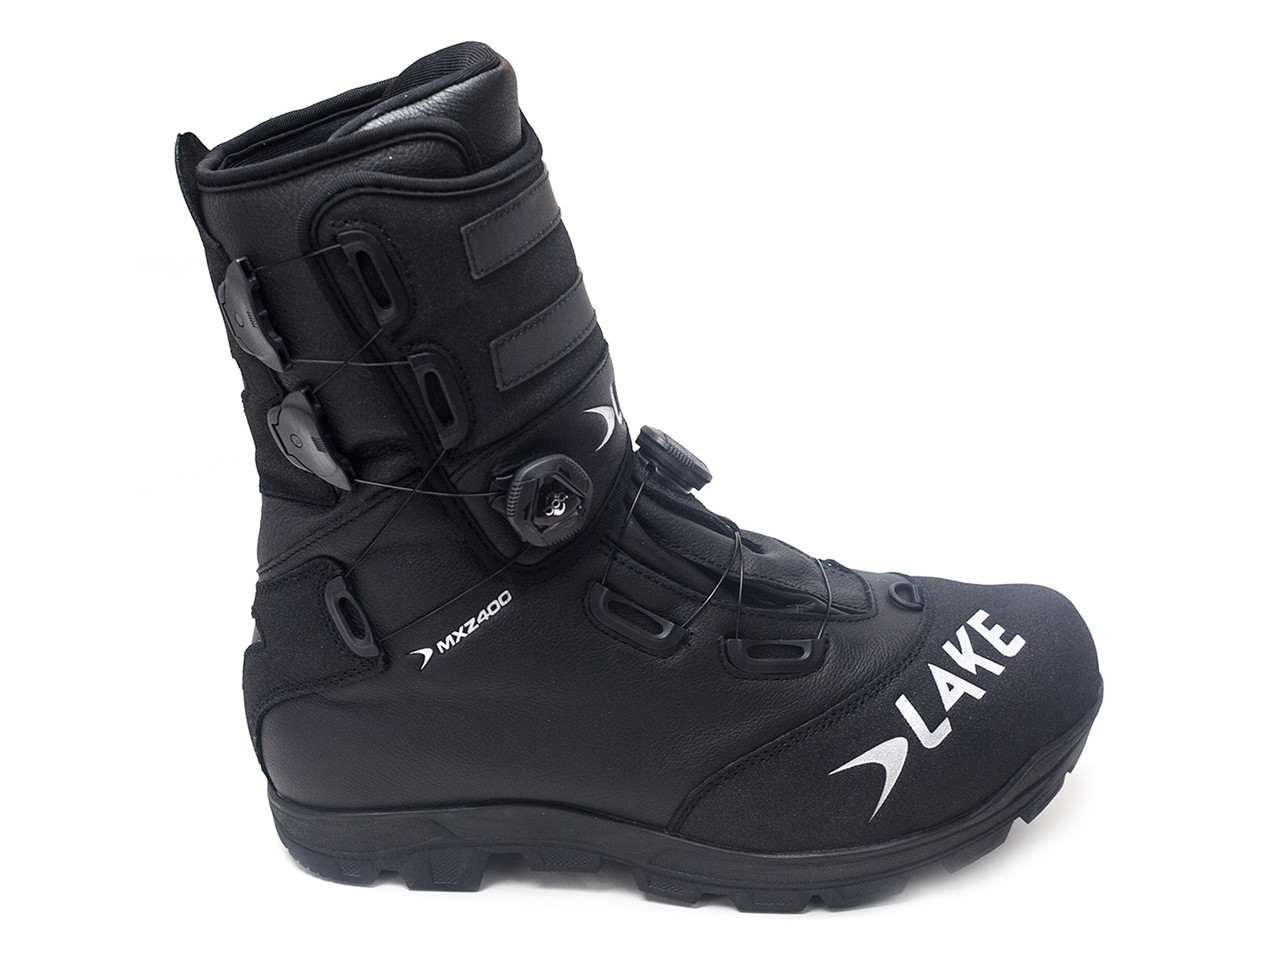 Lake MXZ400 Winter Mountain Bike Shoes BikeShoes.com - 3 day shipping on orders over